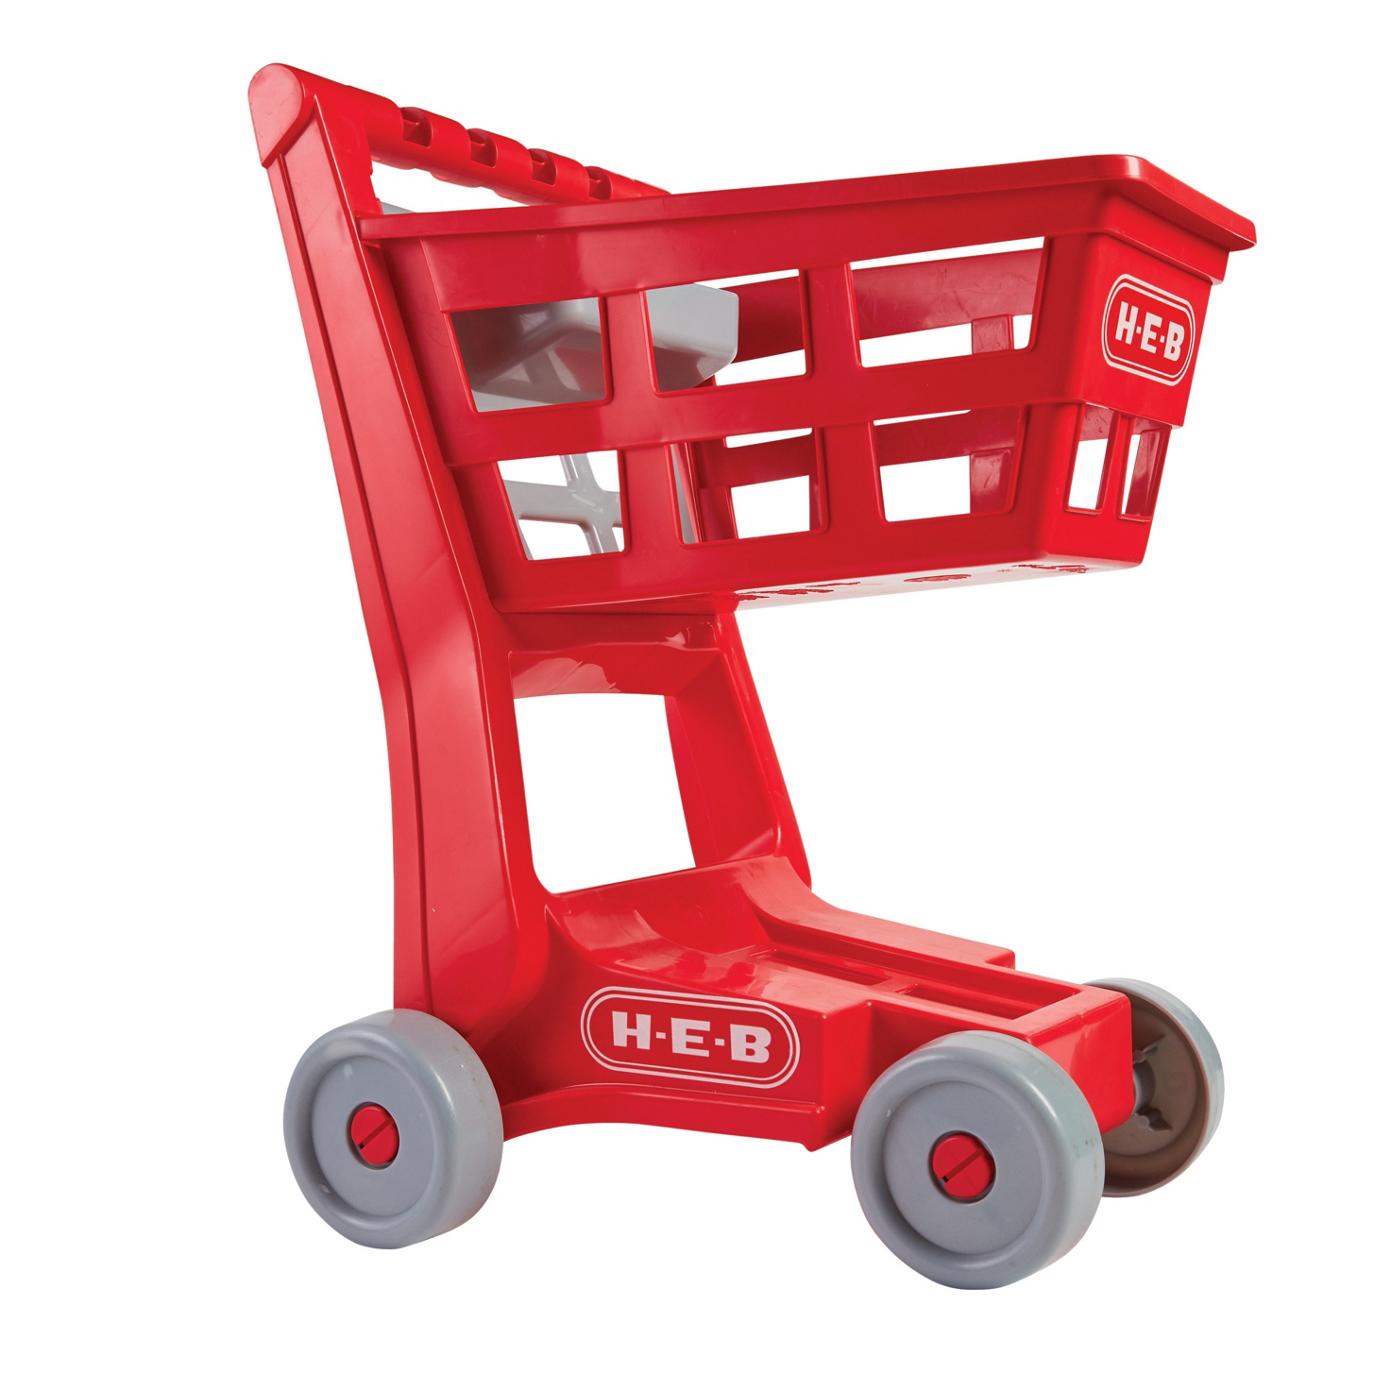 H-E-B Kids Reusable Shopping Cart - Red; image 2 of 2